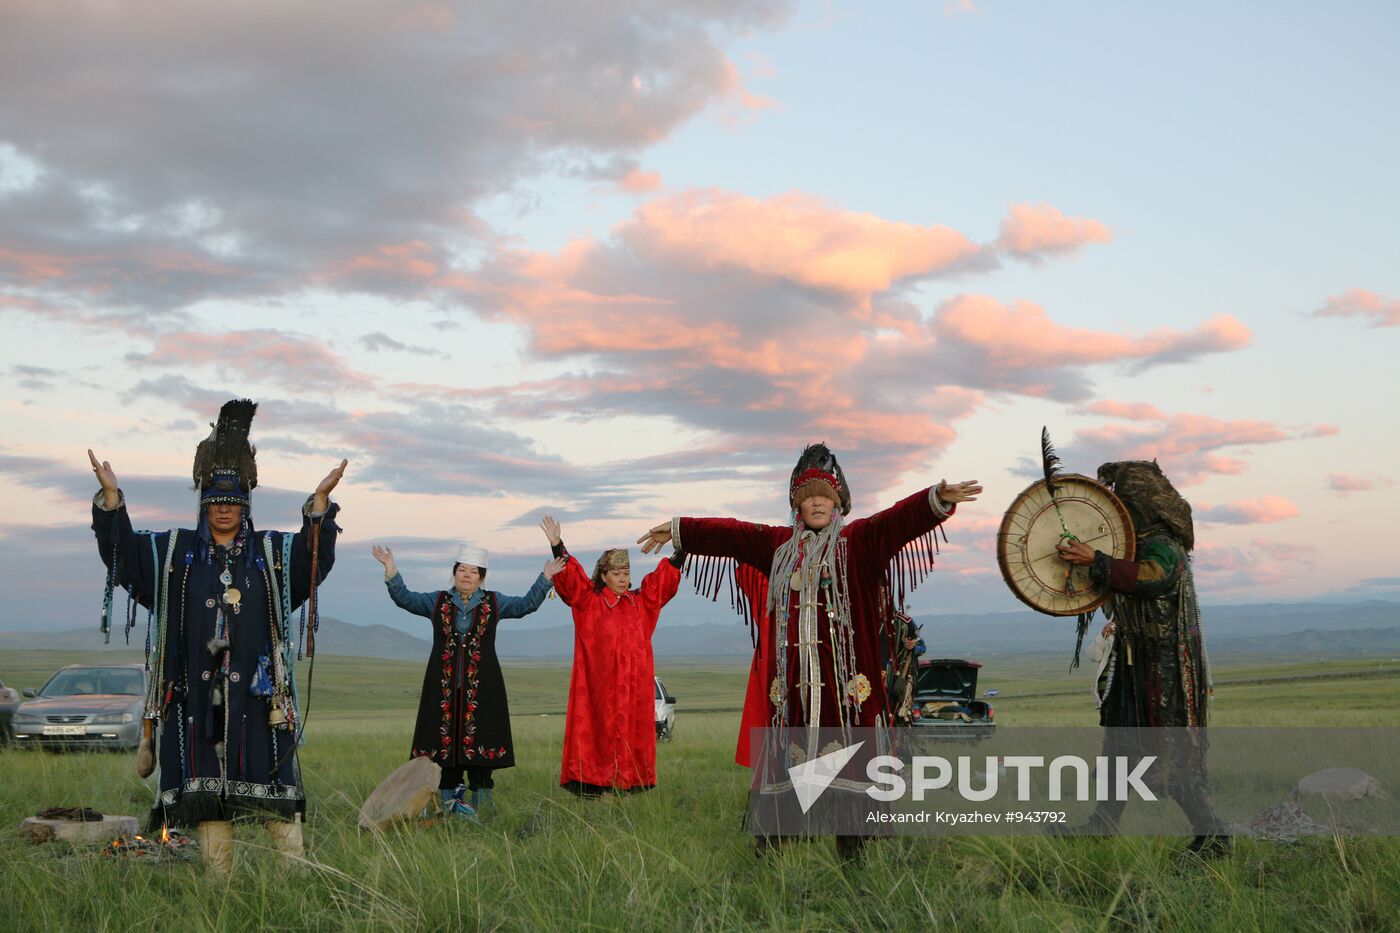 Tuva people's supreme shaman performs grand ritual